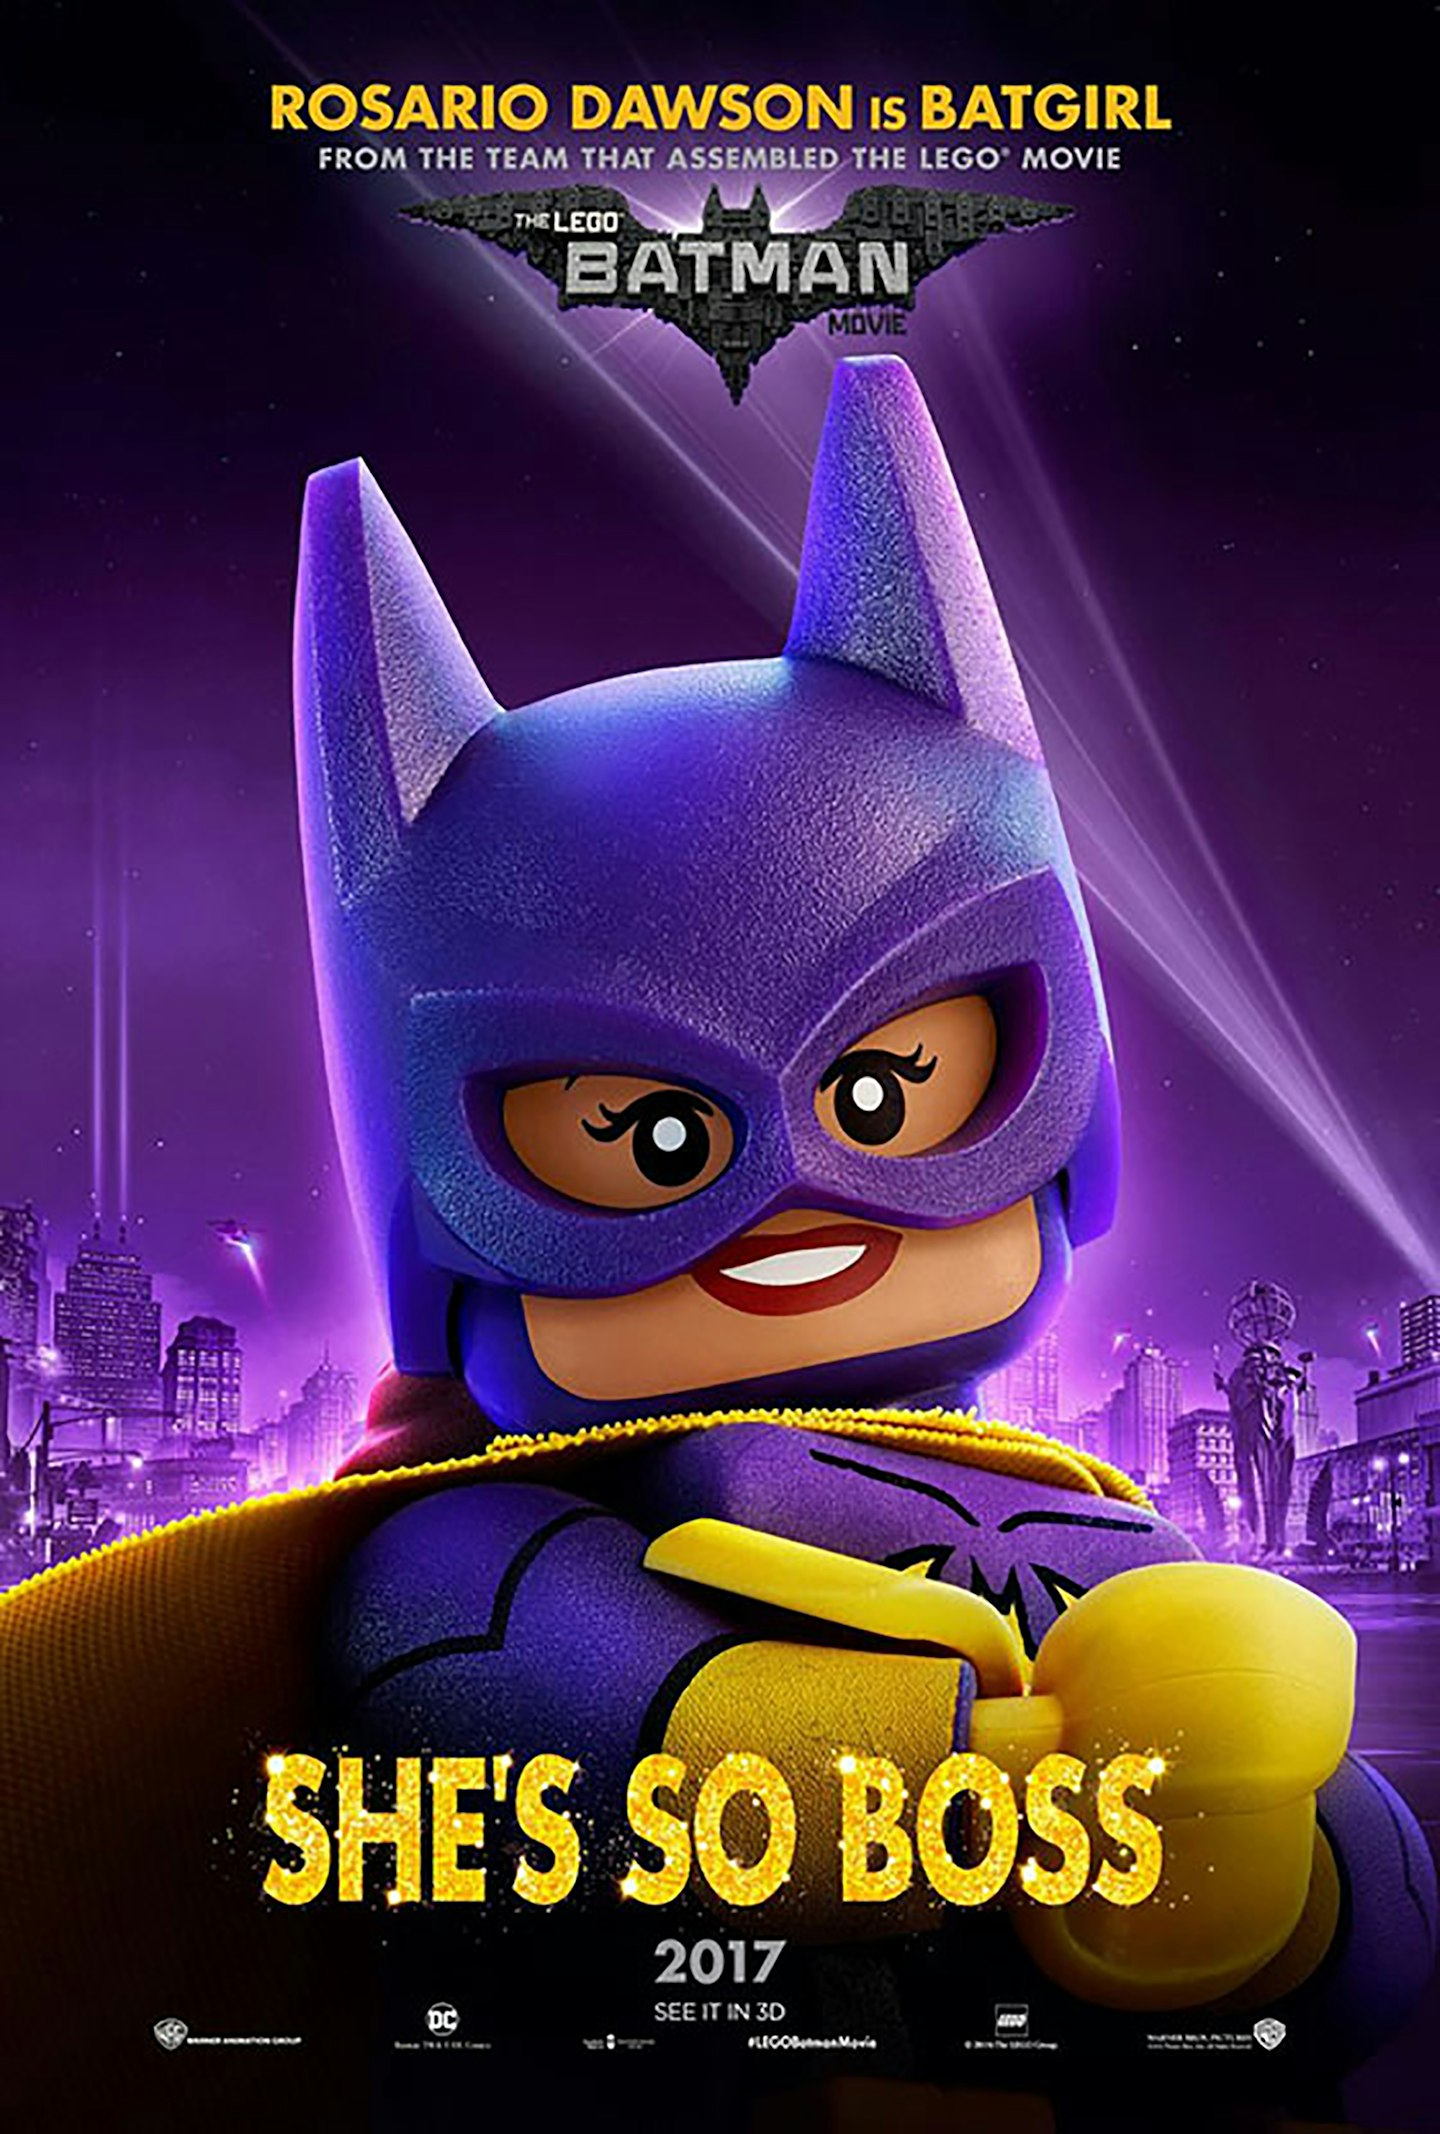 lego-batman-movie-batgirl-poster